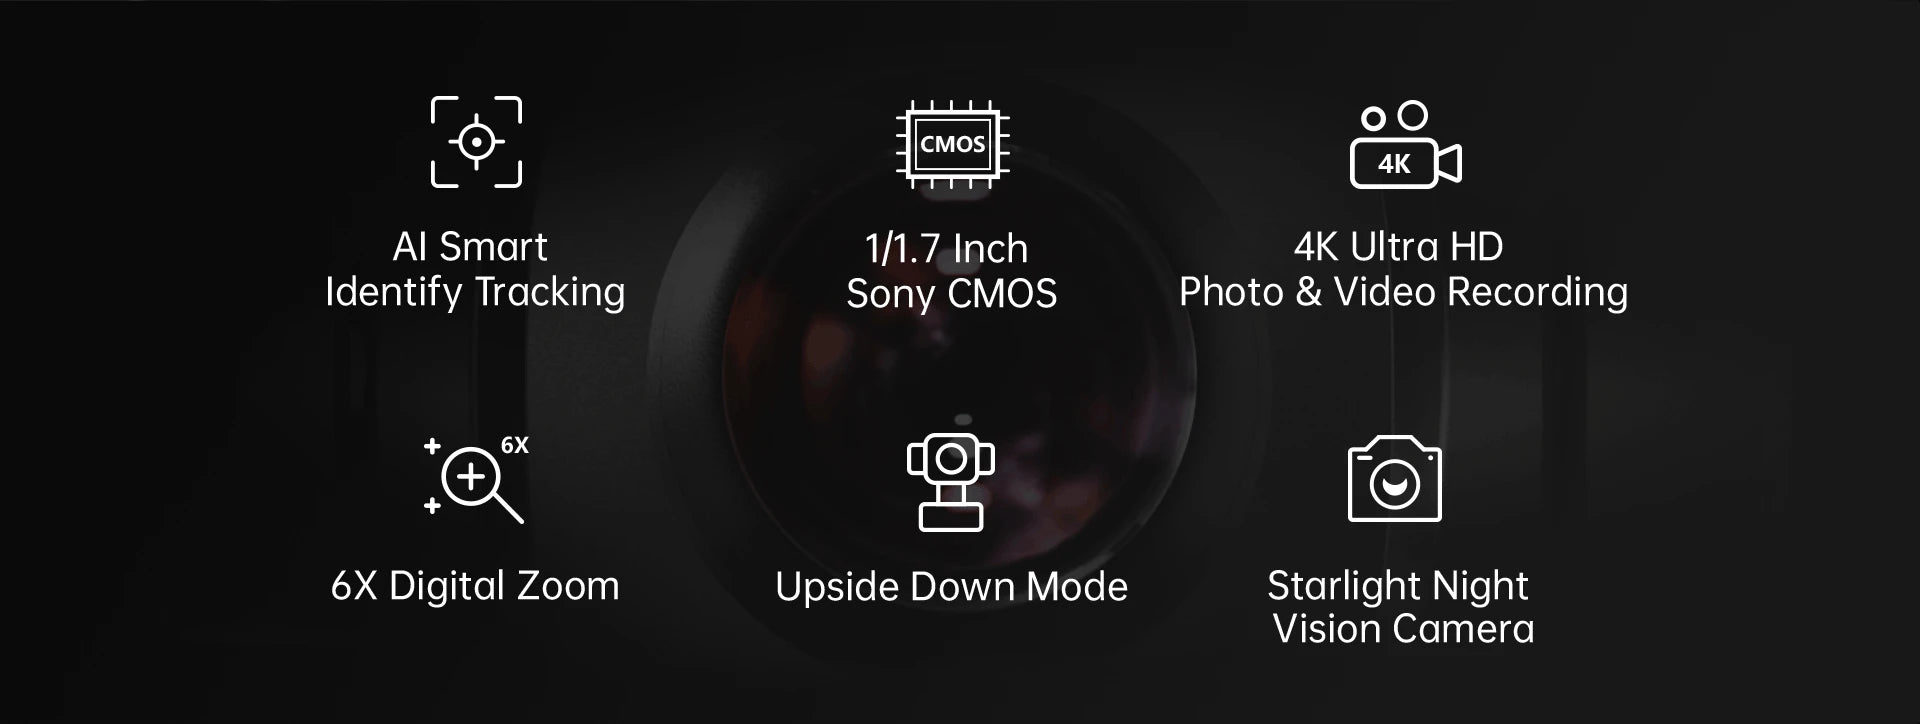 Sony CMOS Photo & Video Recording 6X 6X Digital Zoom Upside Down